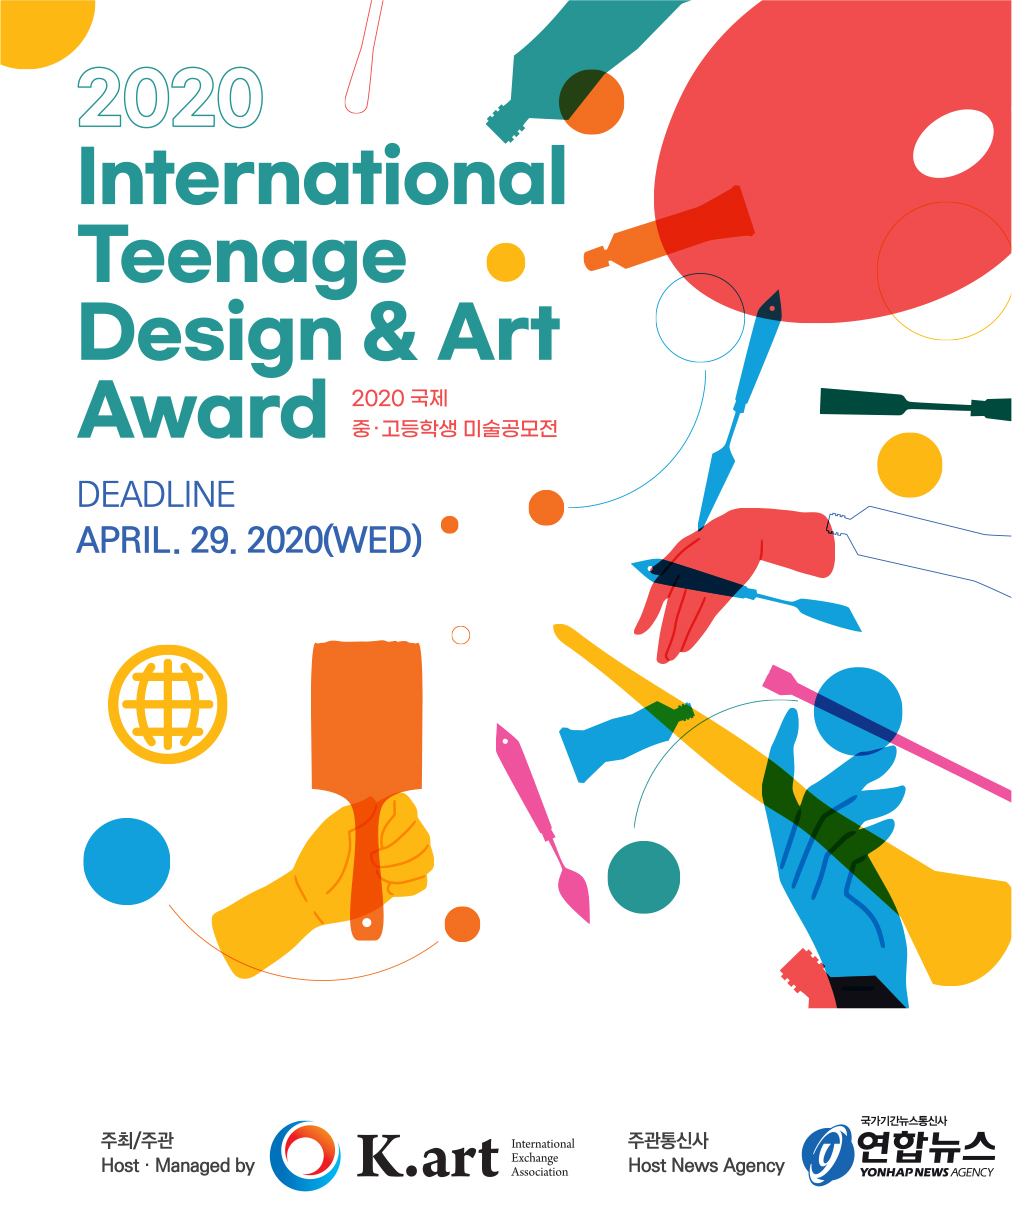 2020 International Teenage Design & Art Award